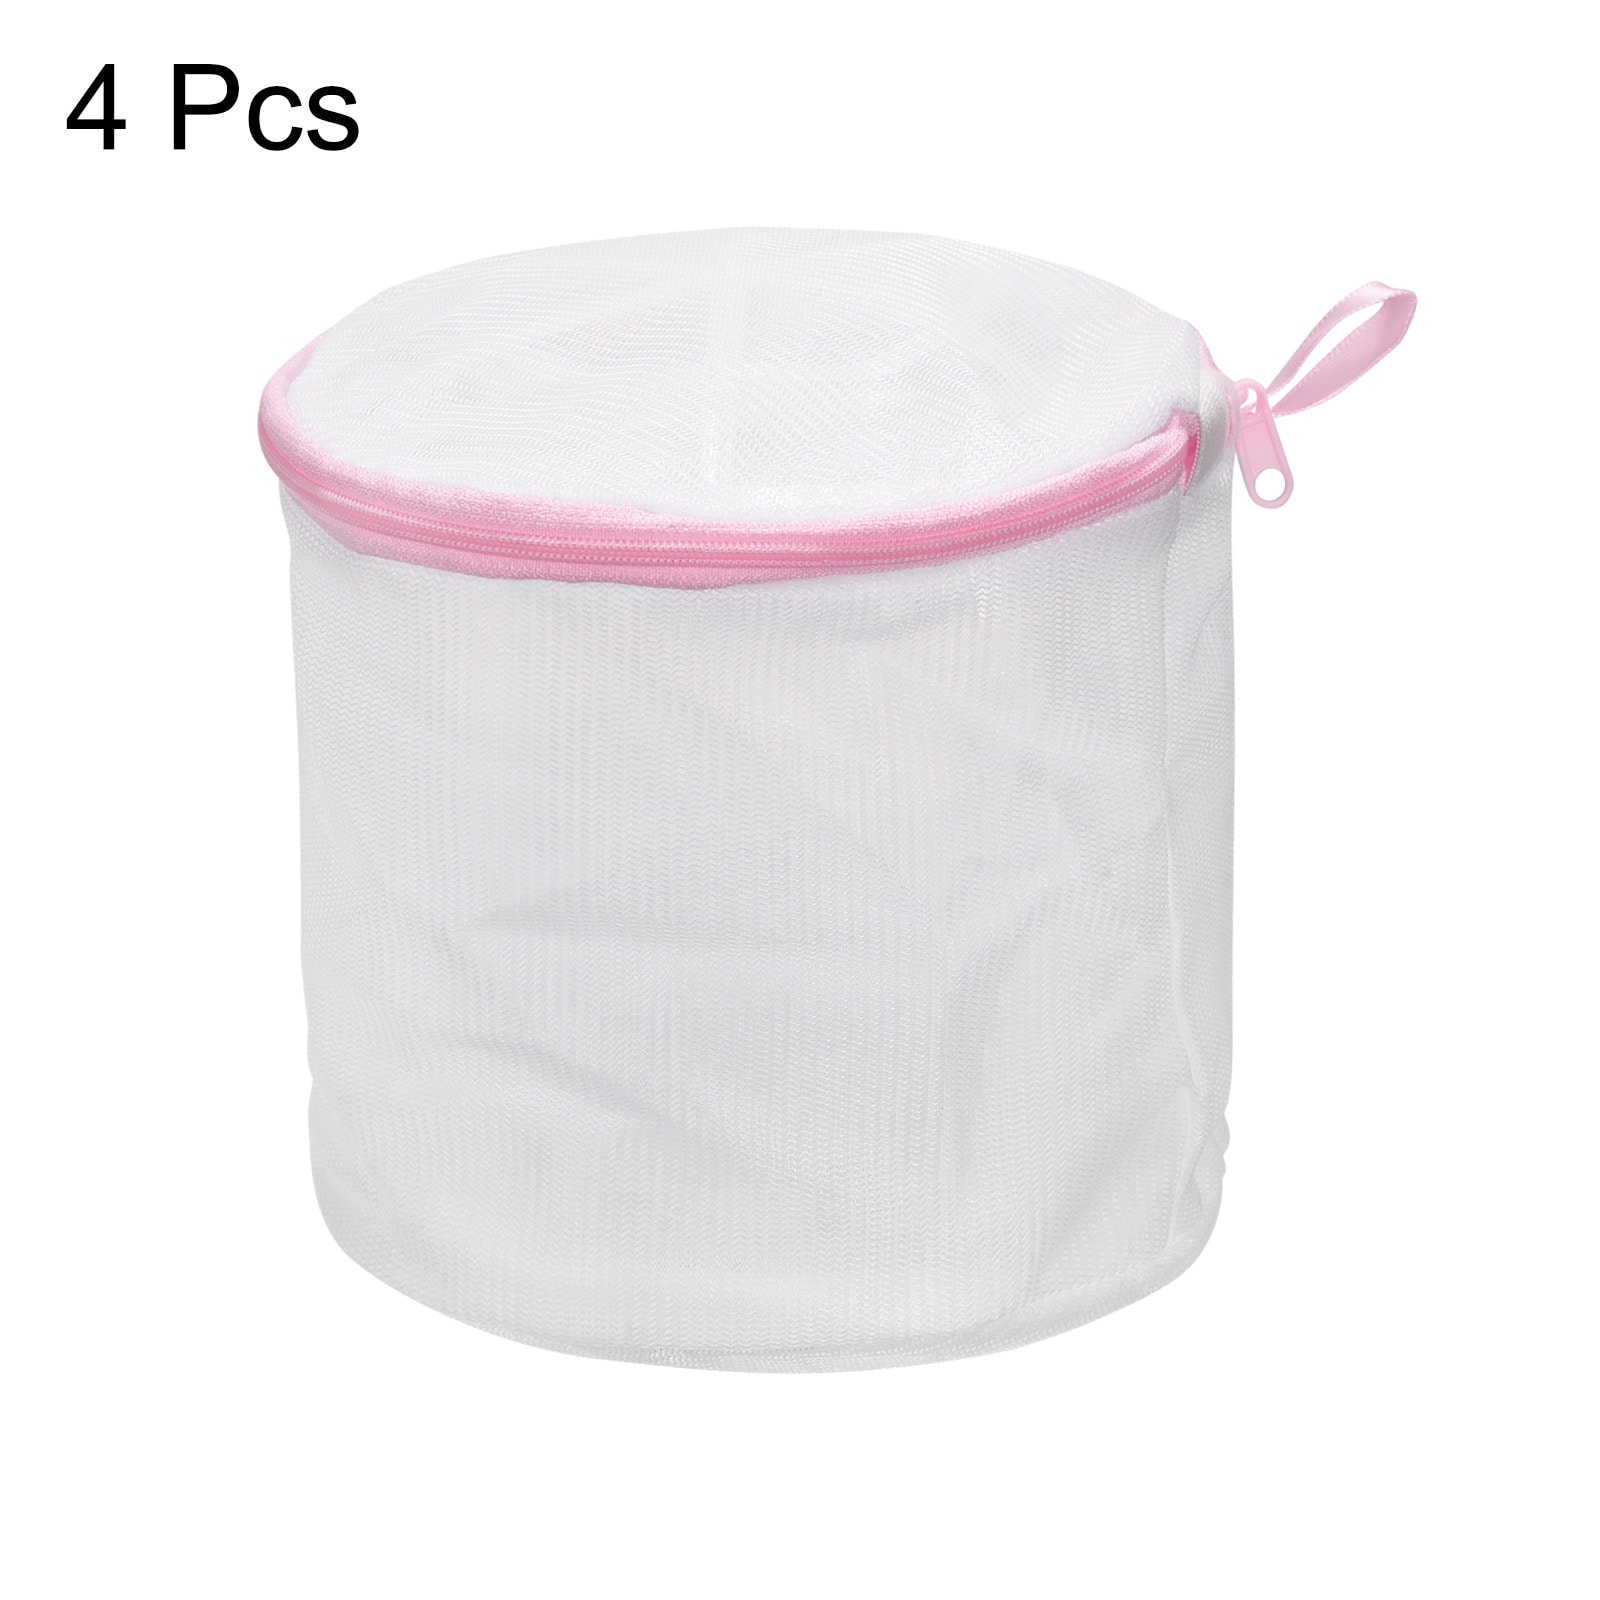 4Pcs 6.7x7.1 Cylinder Mesh Laundry Bags Bra Washing Bag for